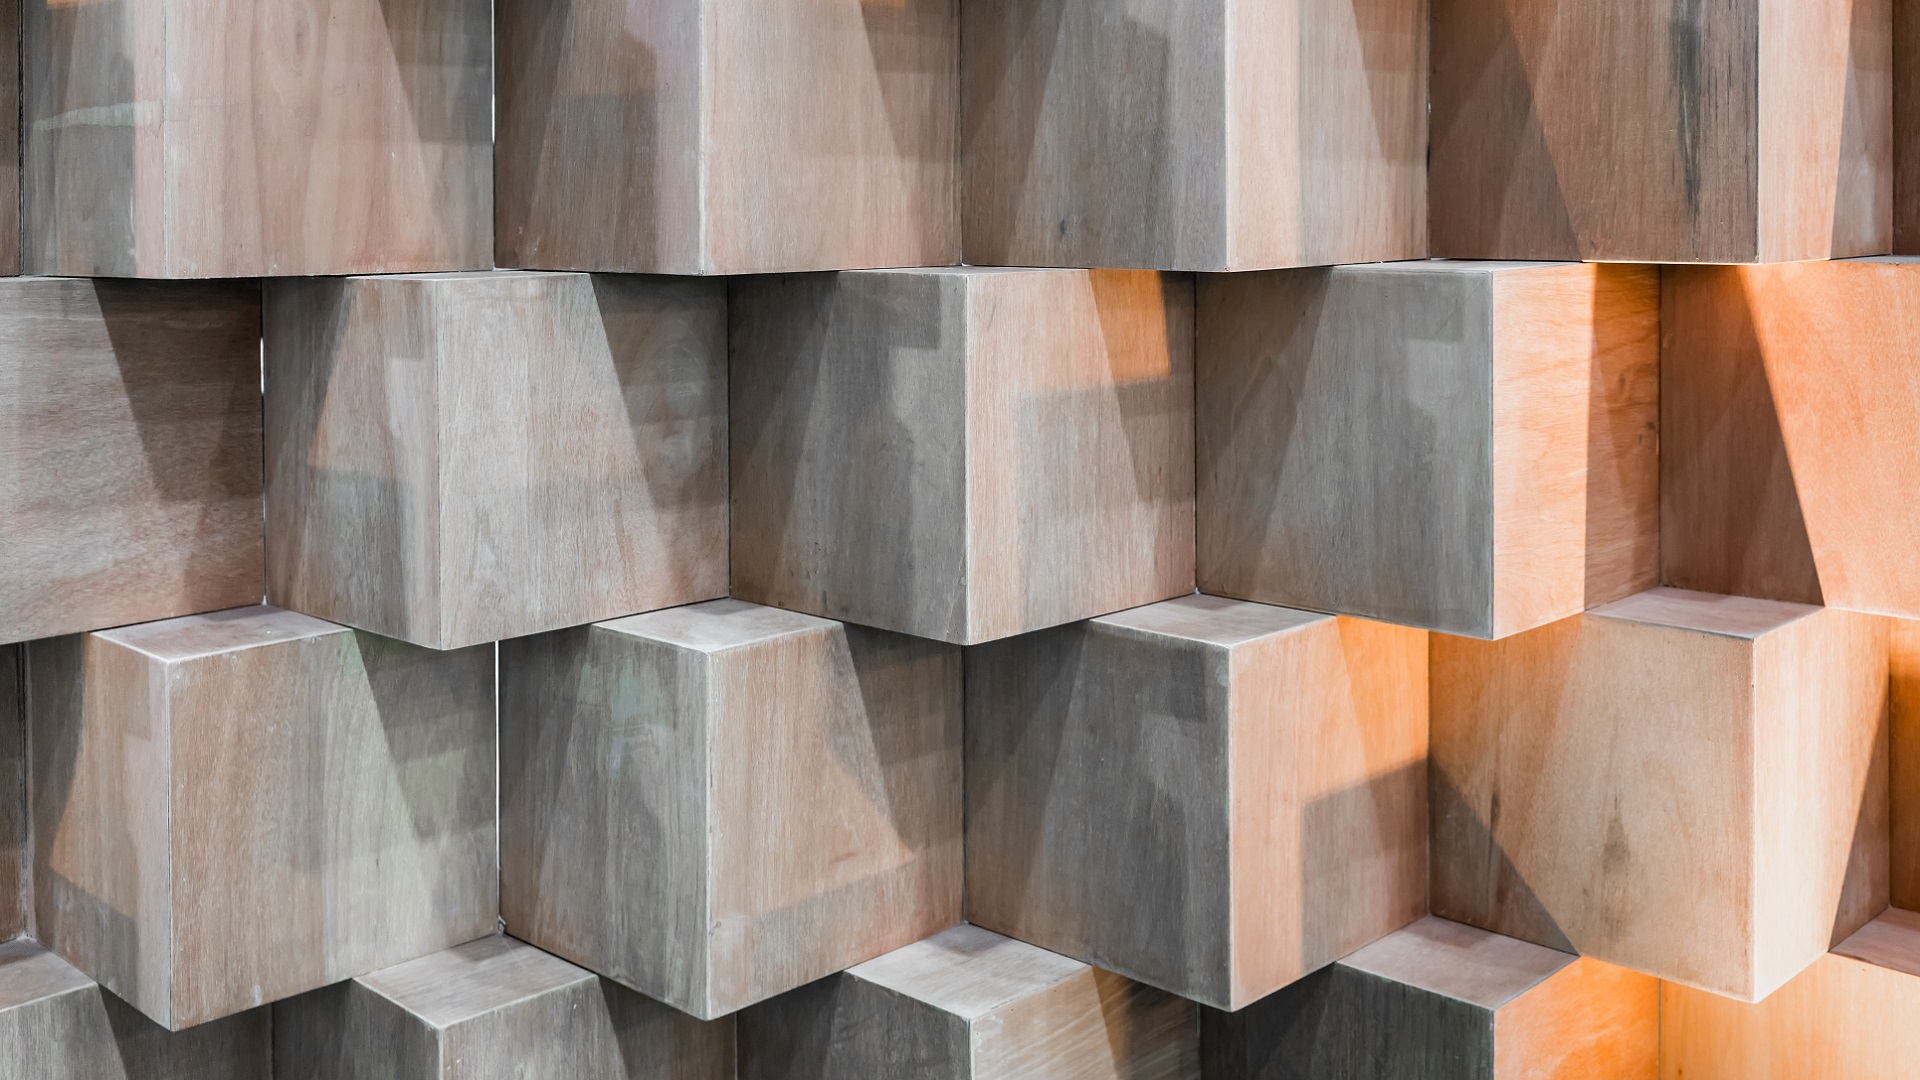 Symmetrical wooden blocks